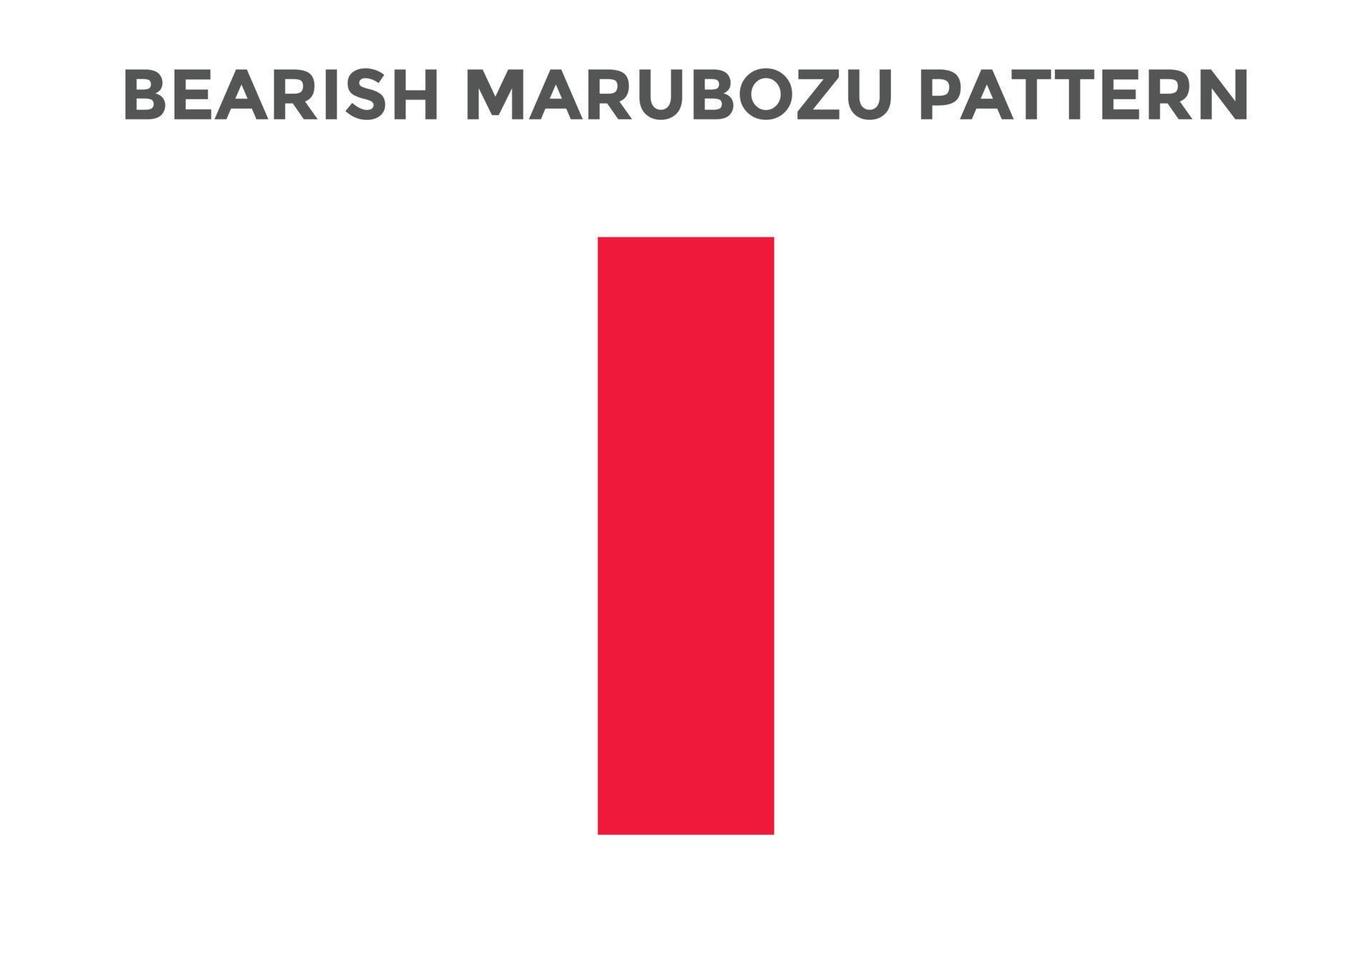 bearish marubozu kandelaargrafiekpatronen. beste kandelaargrafiekpatroon voor forex, aandelen, cryptocurrency enz. online handel en beursanalyse. vector